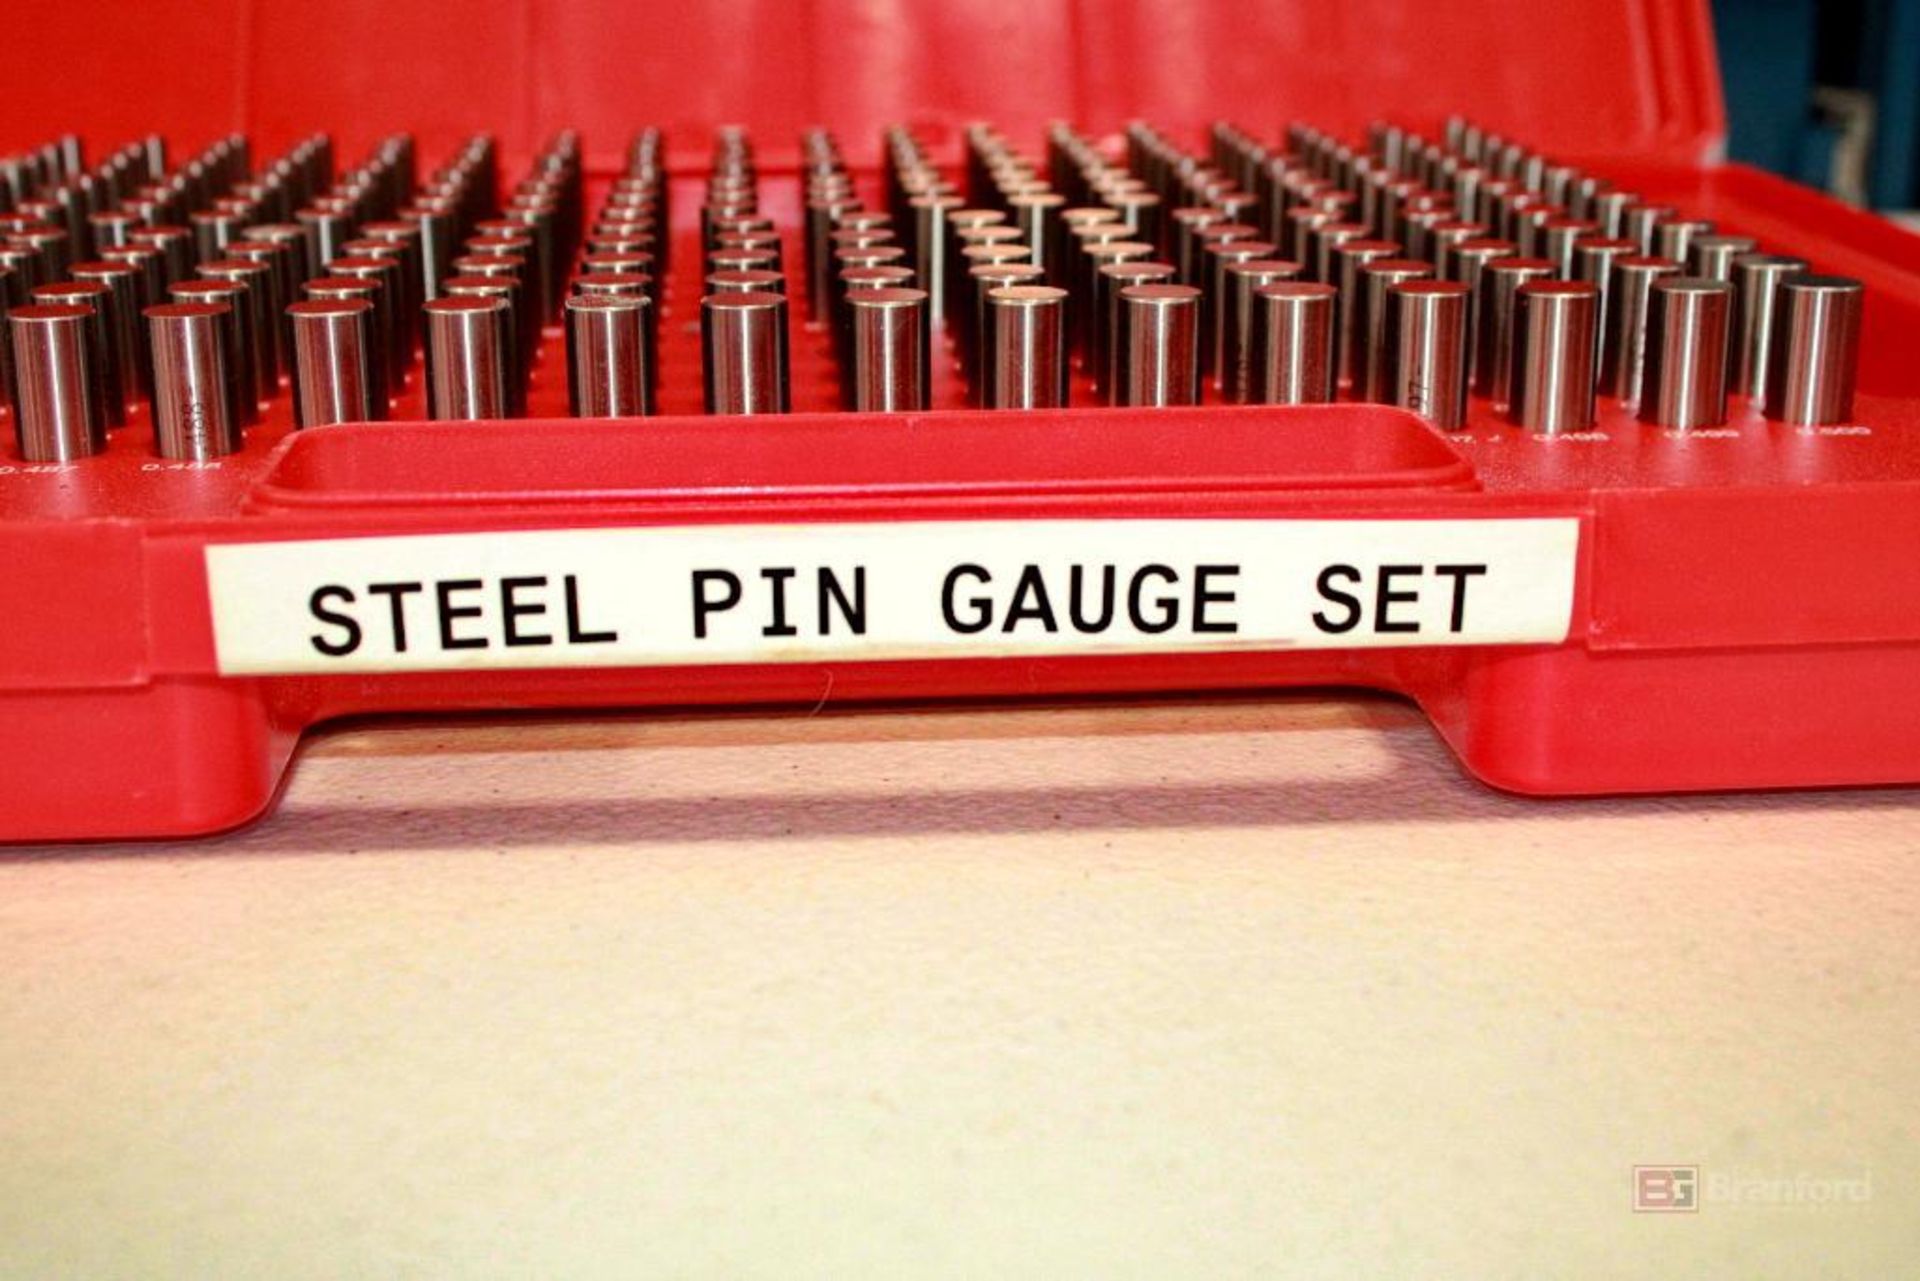 Steel Pin Gauge Set, 250 Piece Set - Image 2 of 5